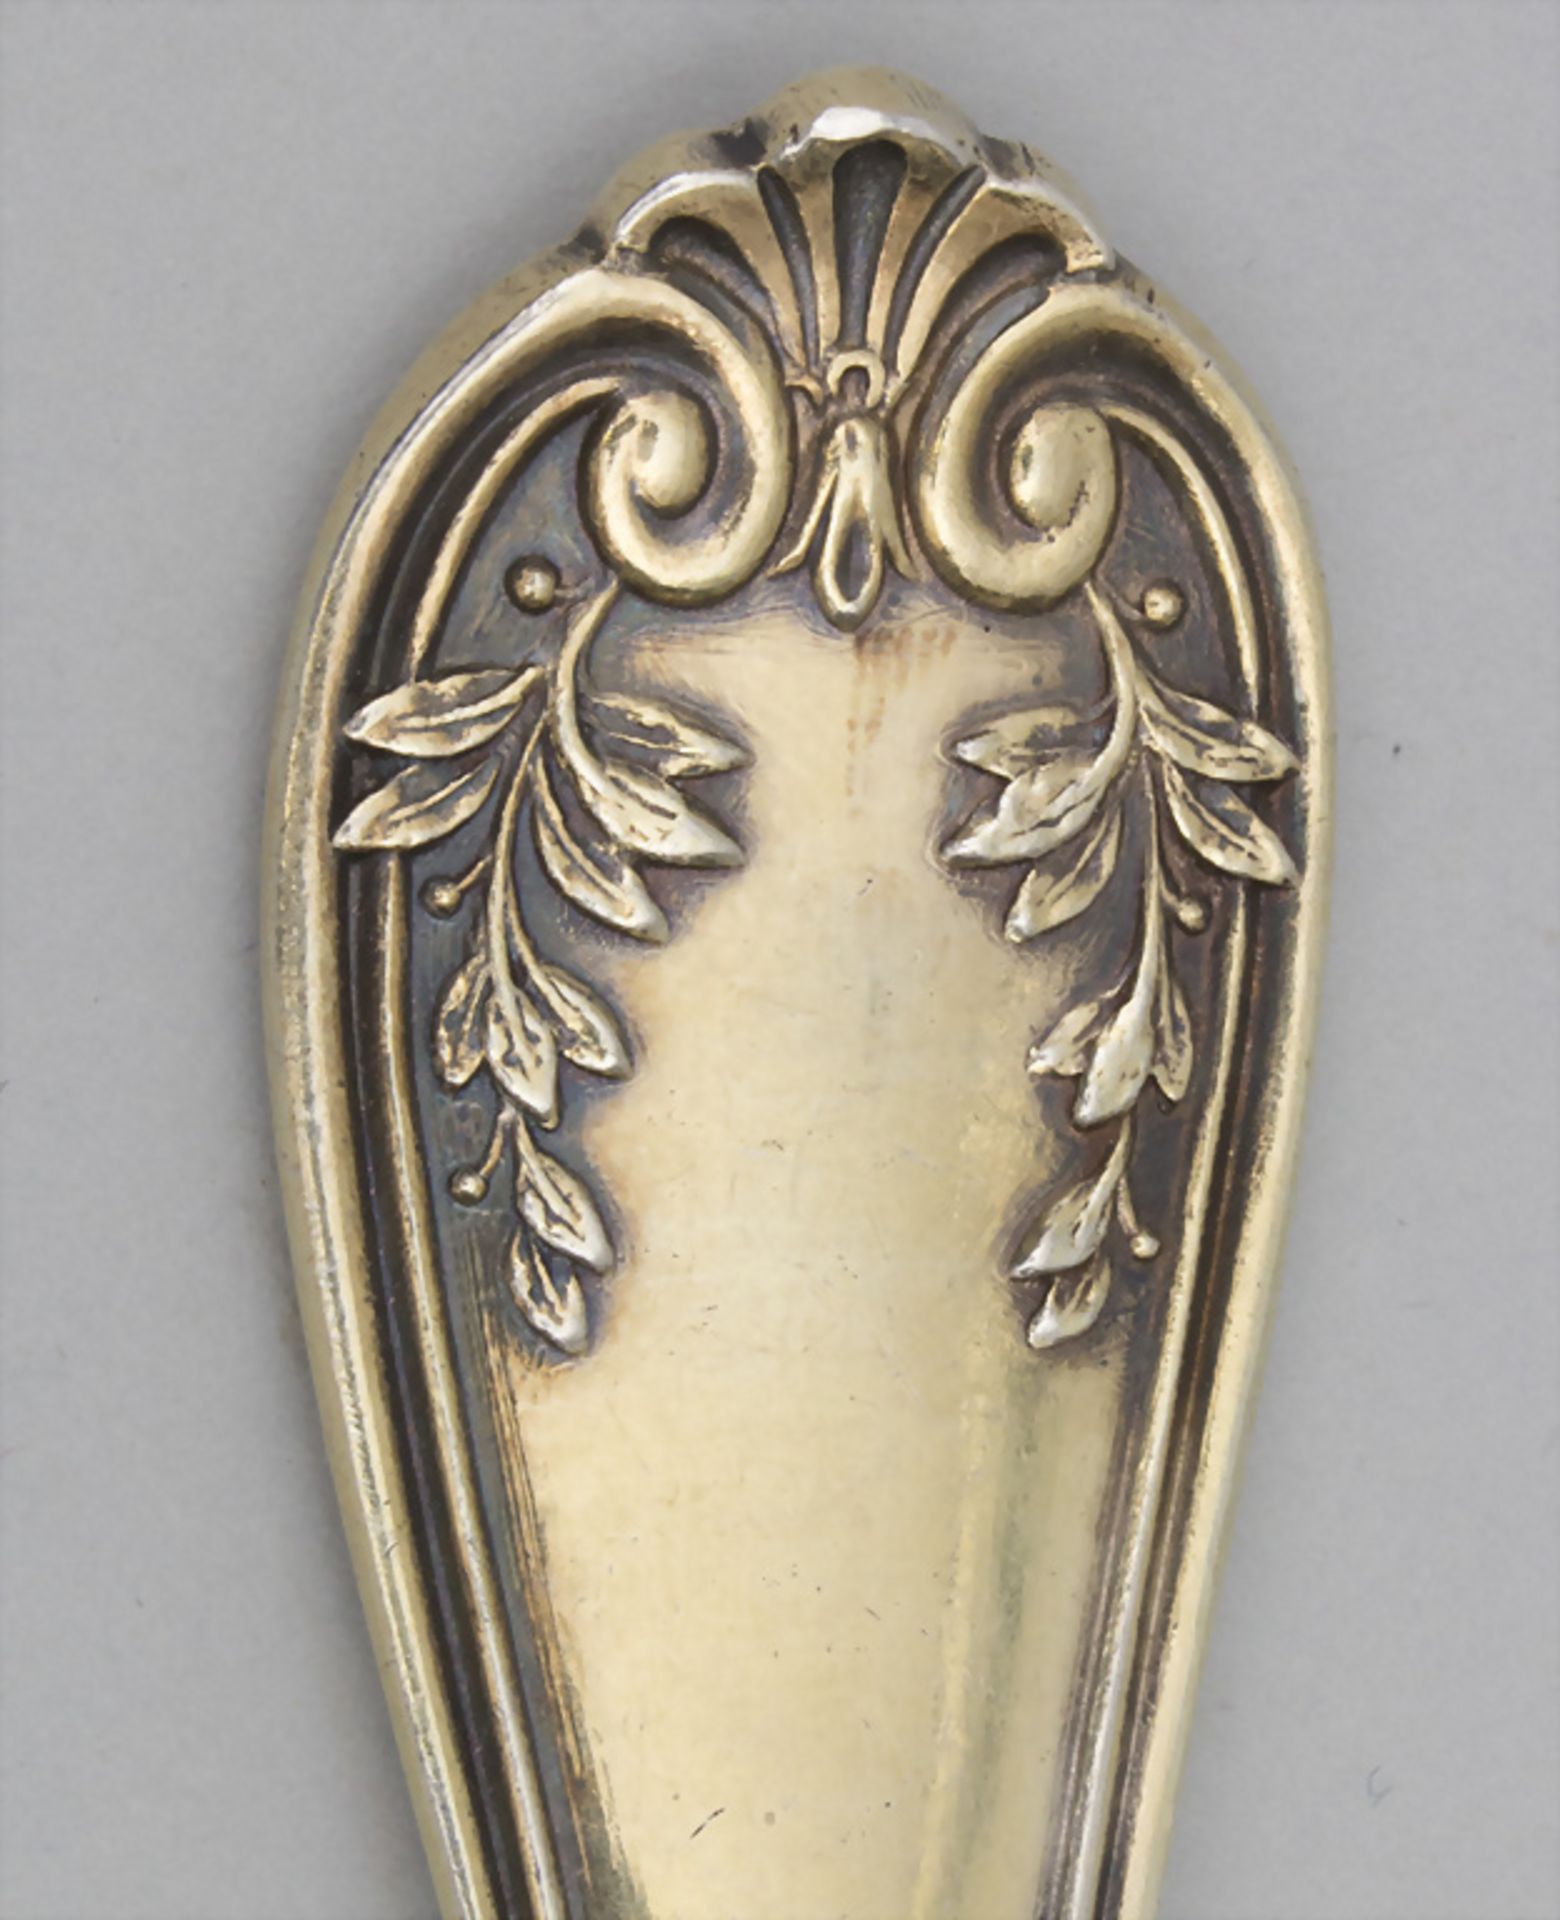 12-teiliges Silberbesteck / A 12-part silver cutlery, Veyrat, Paris, um 1900 - Image 7 of 8